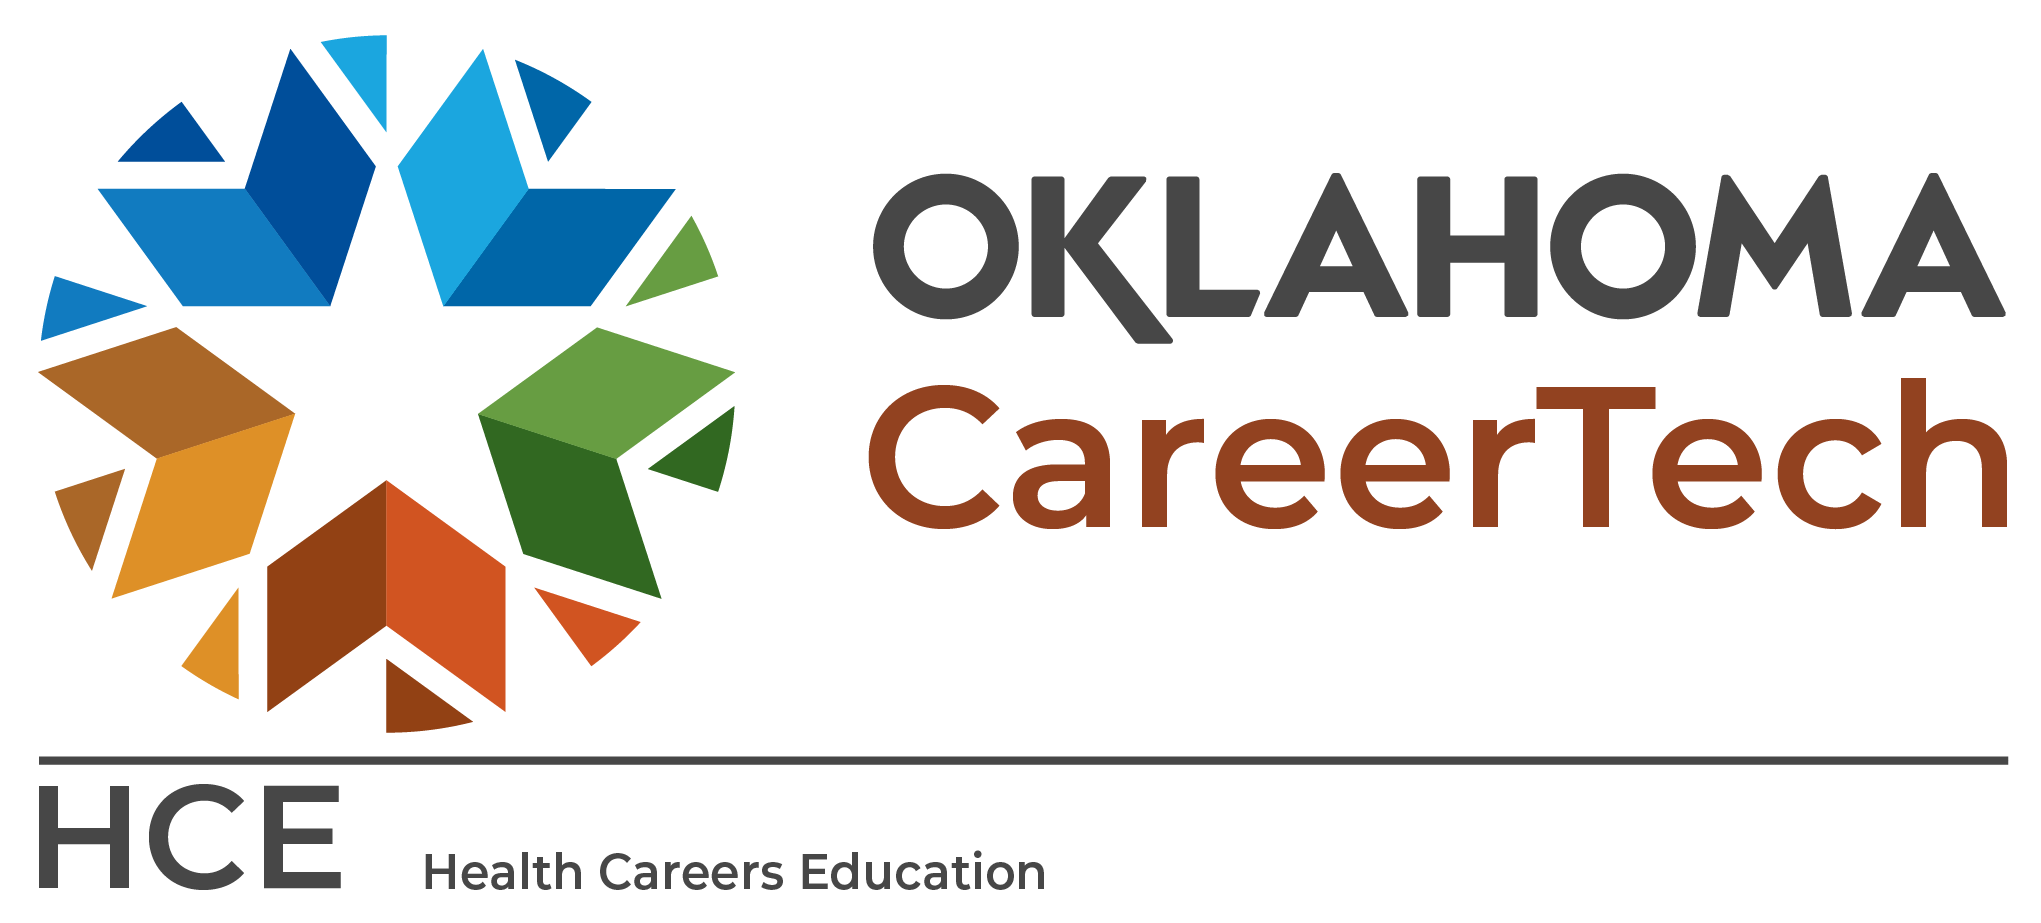 Oklahoma CareerTech - Health Careers Education logo